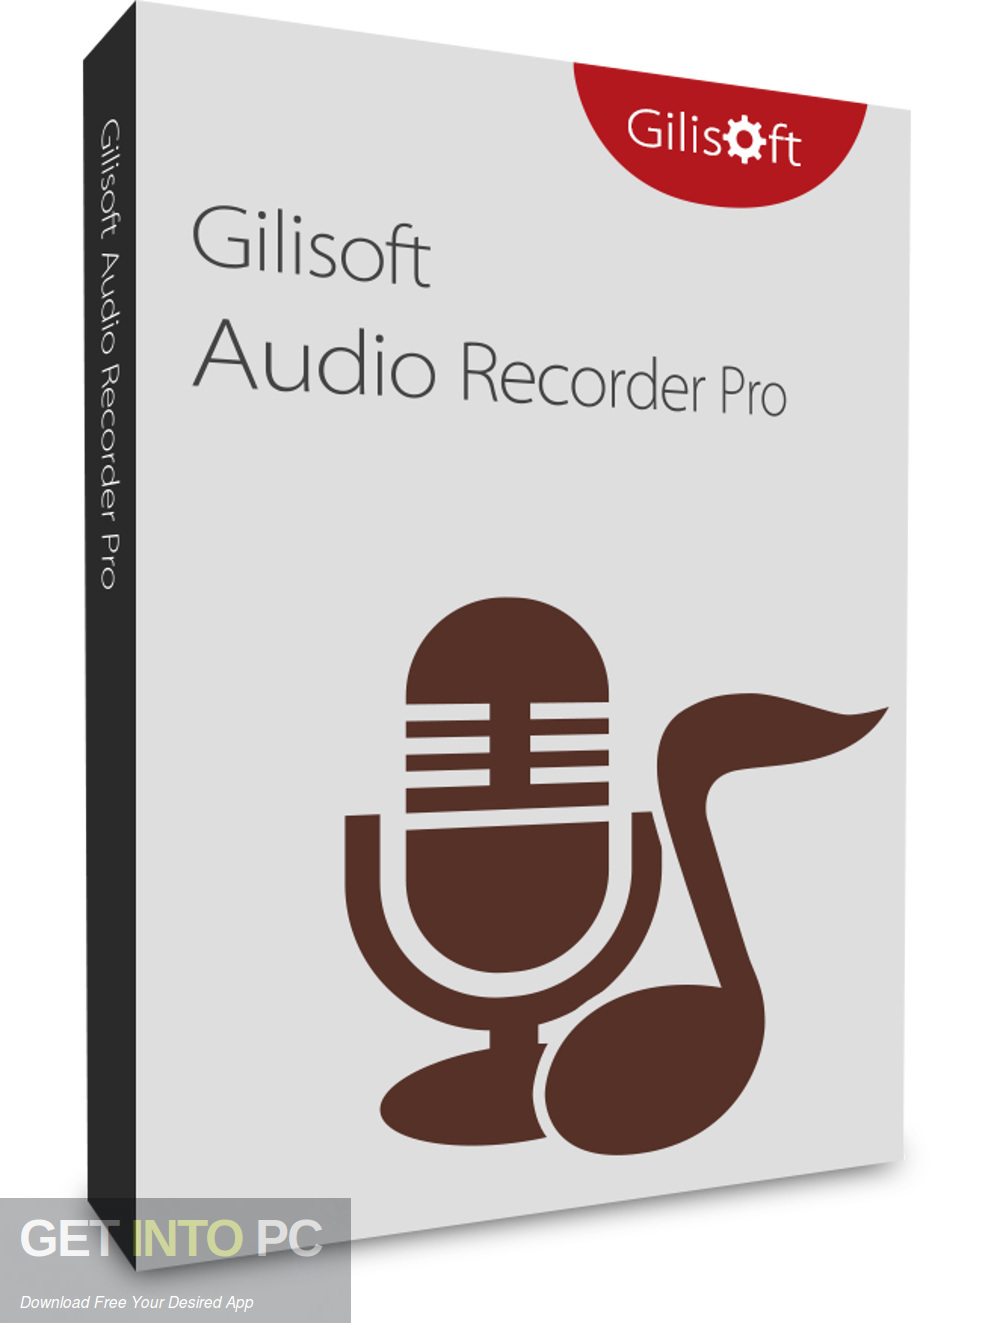 GiliSoft Audio Recorder Pro 11.7 downloading